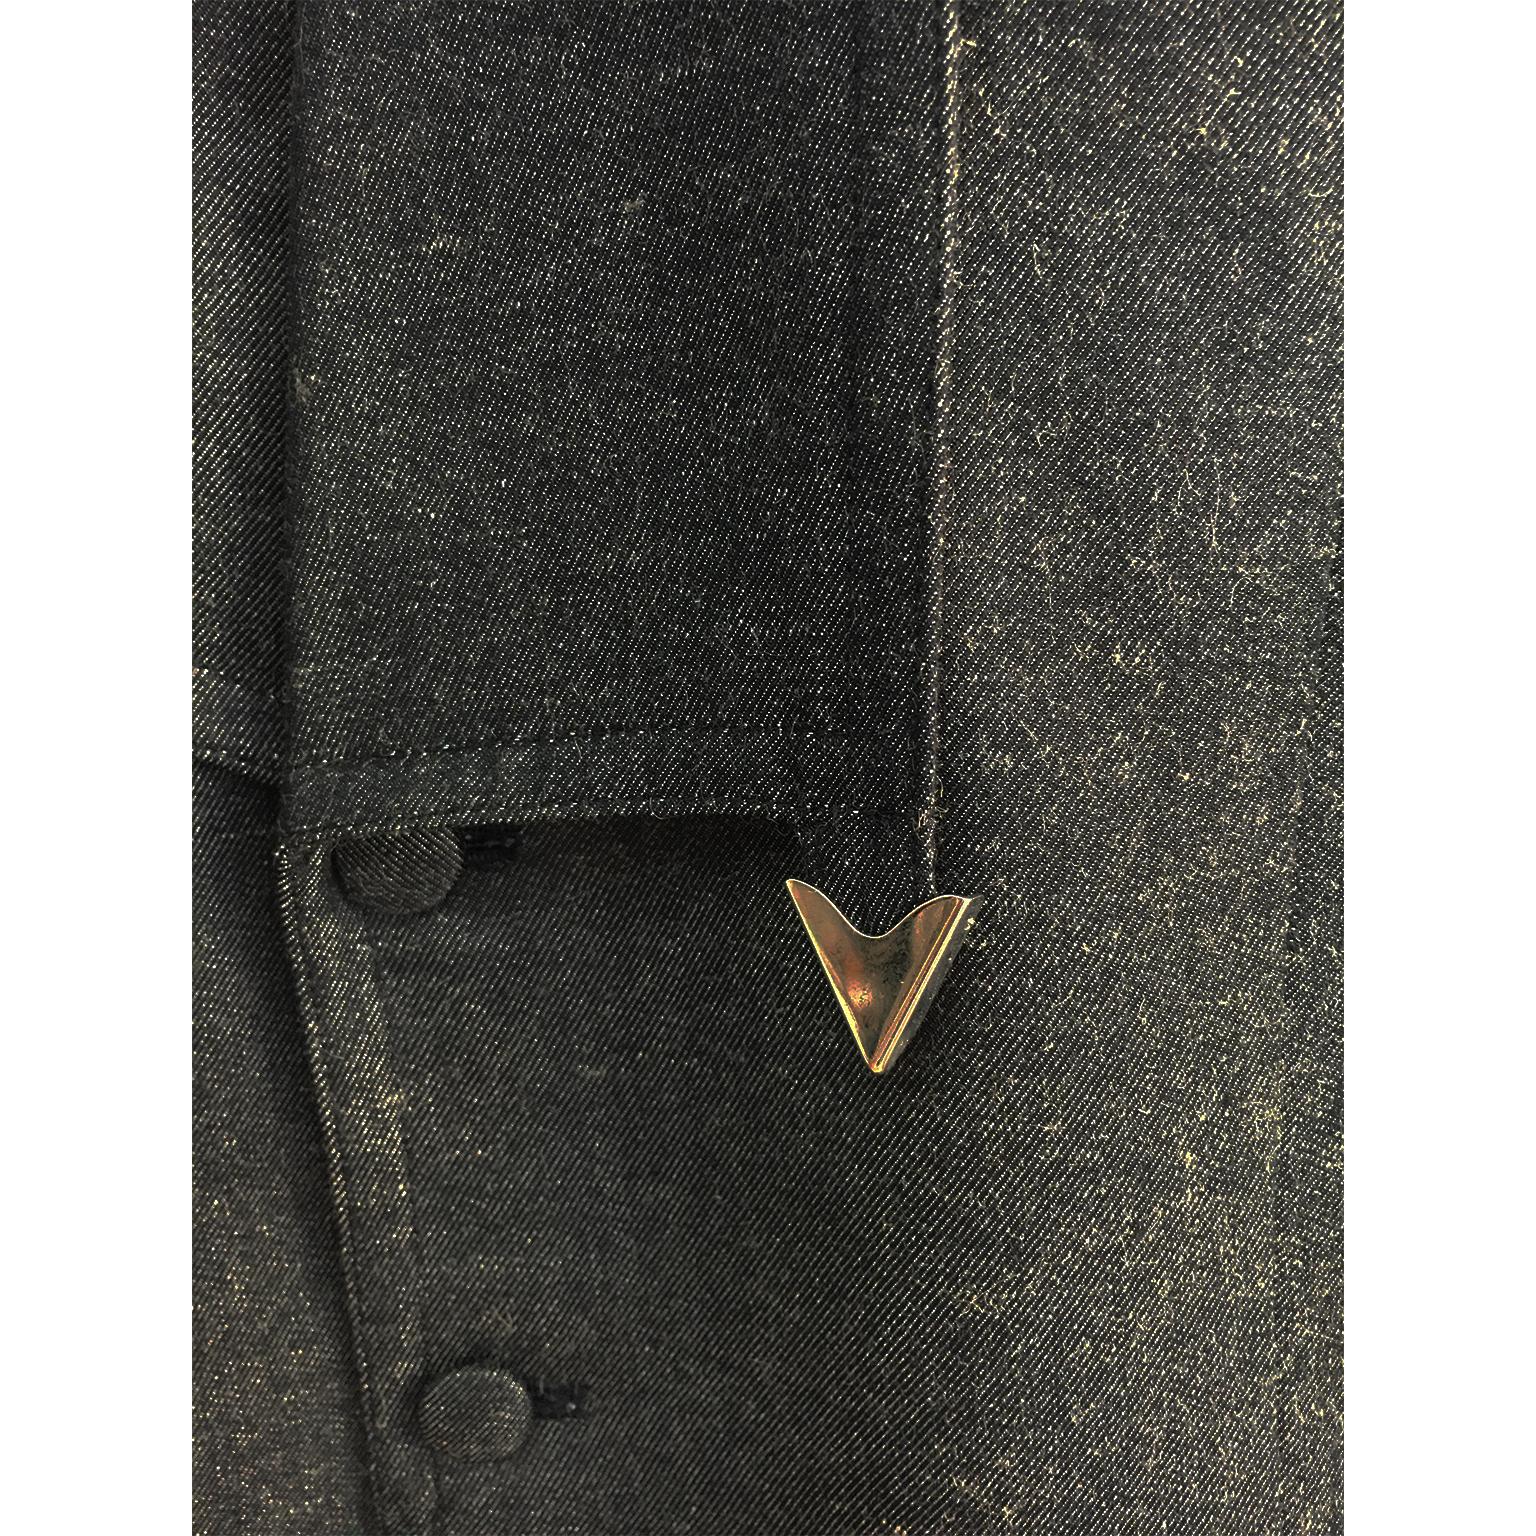 Kansai Yamamoto Dark Grey Jacket Pantsuit Circa Mid 80s For Sale 1